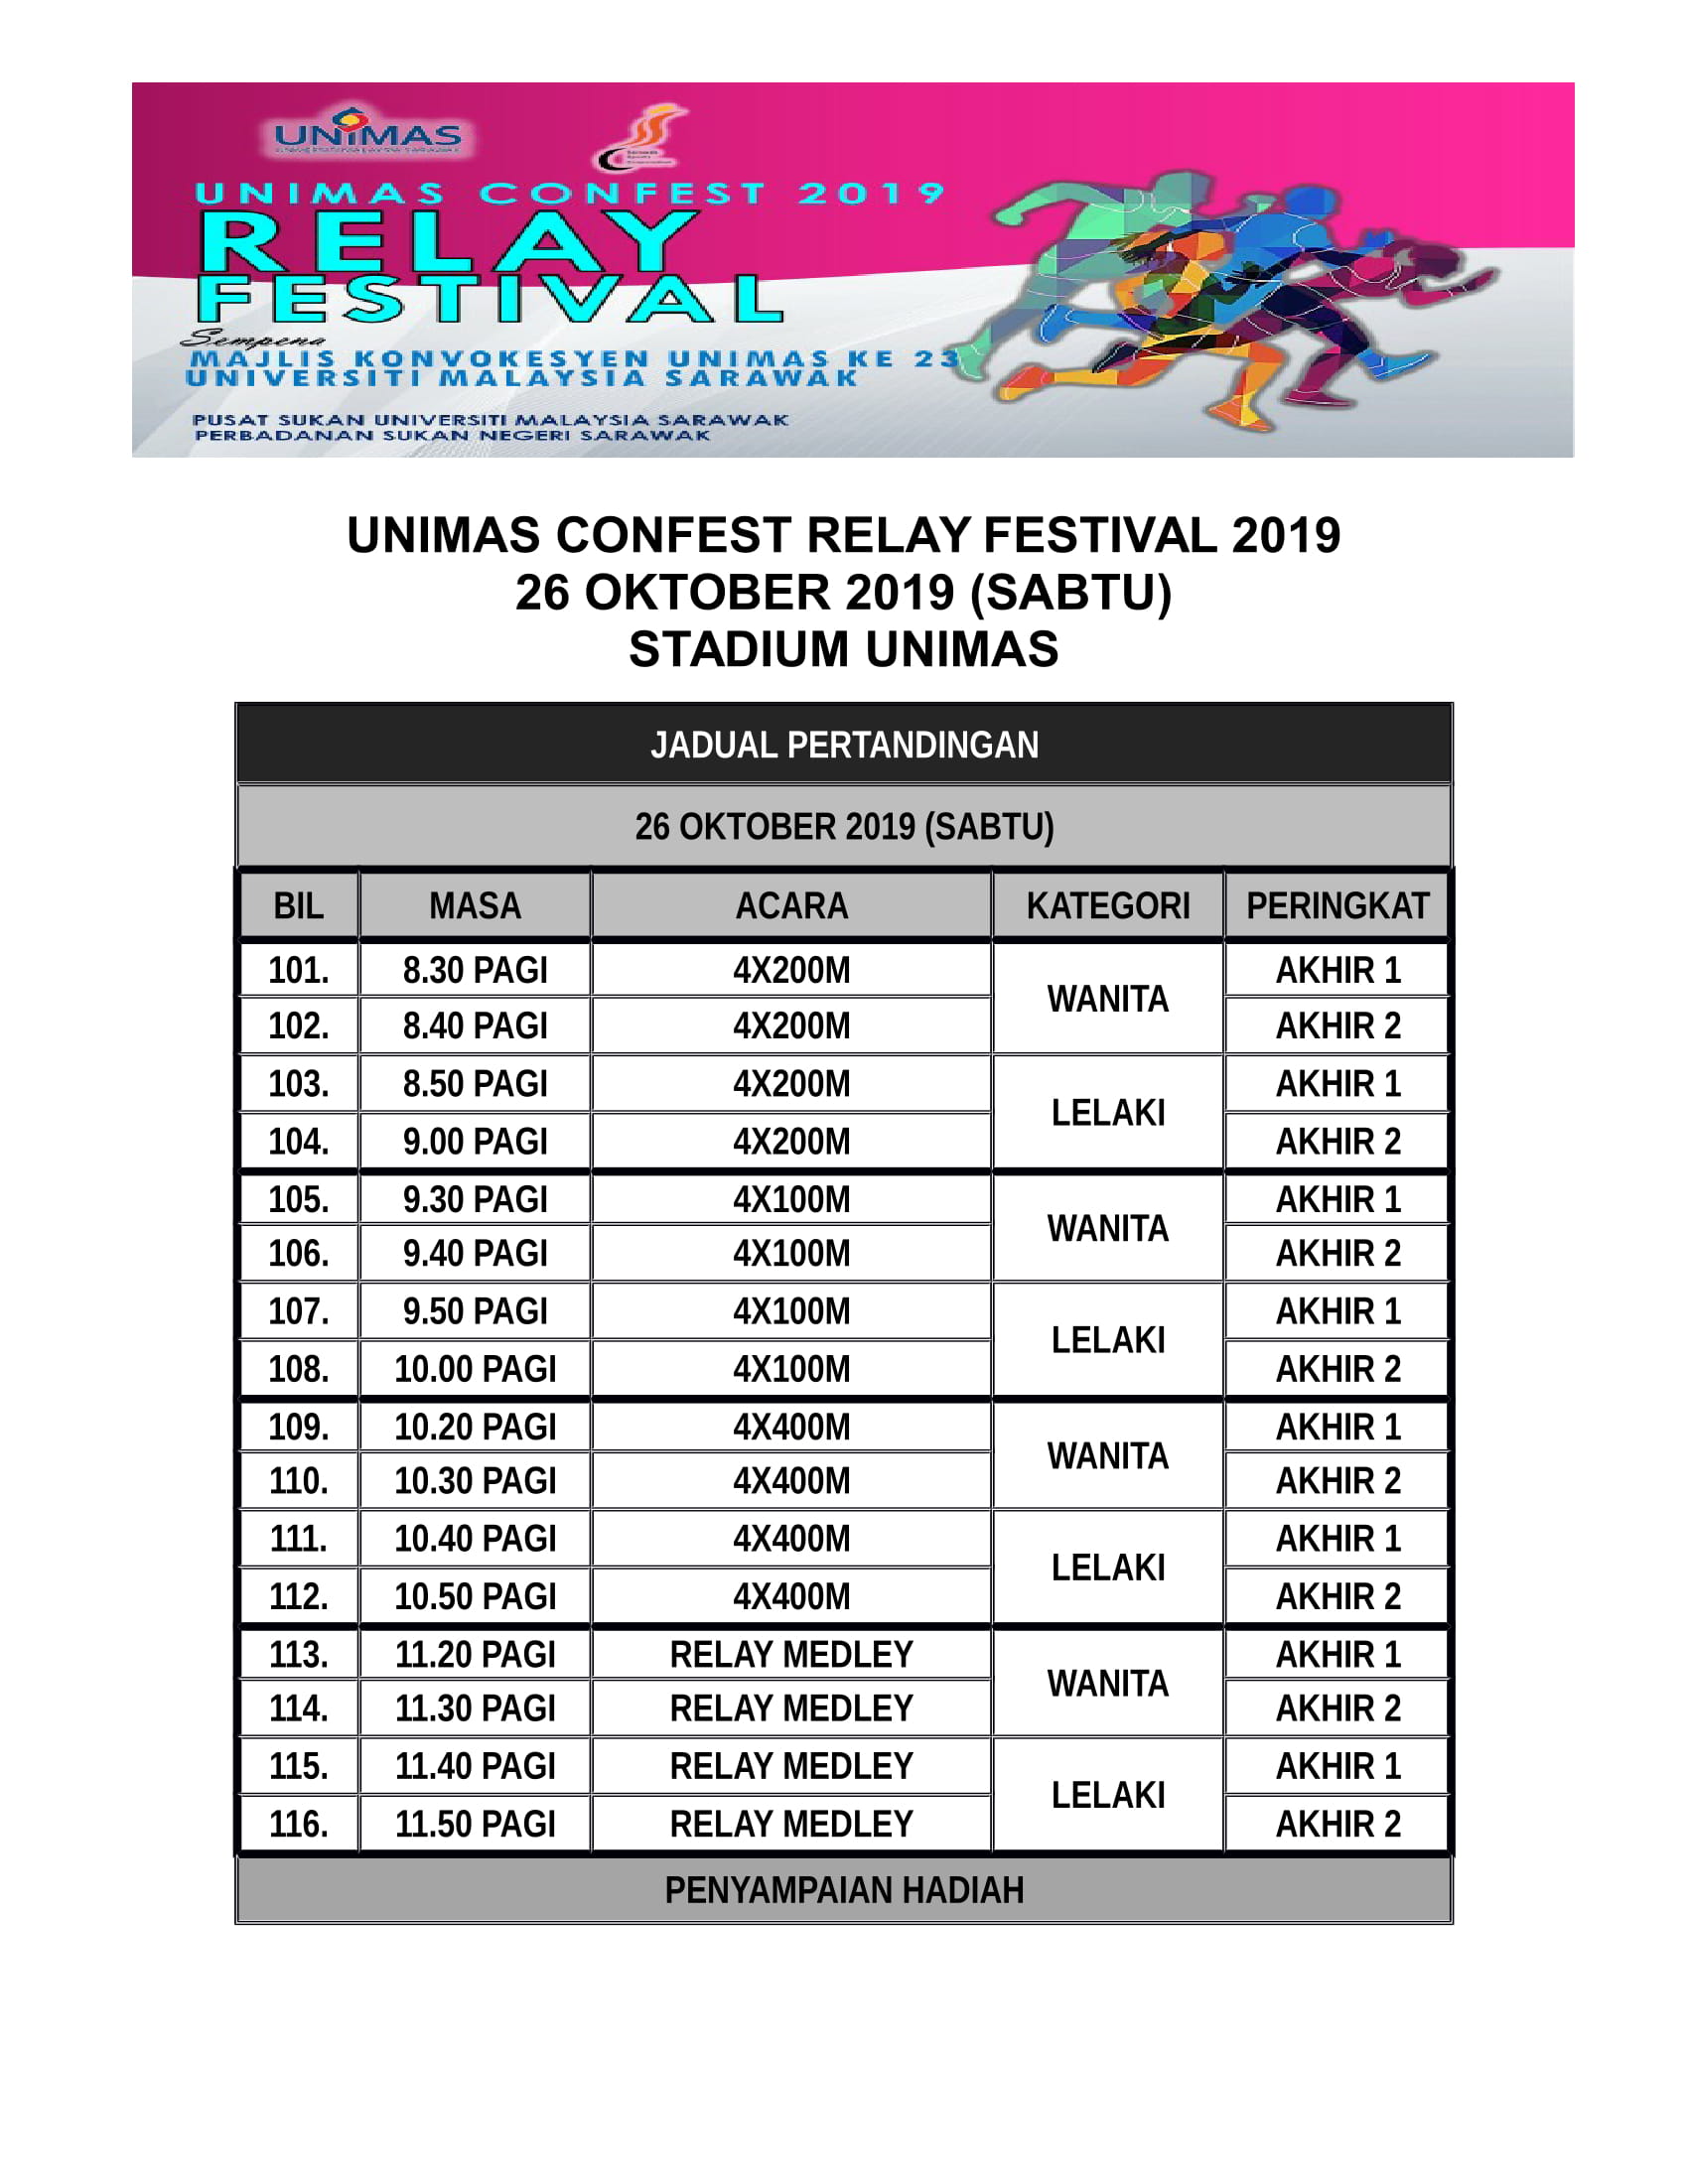 Tentatif UNIMAS Confest Relay Festival 2019-1.jpg